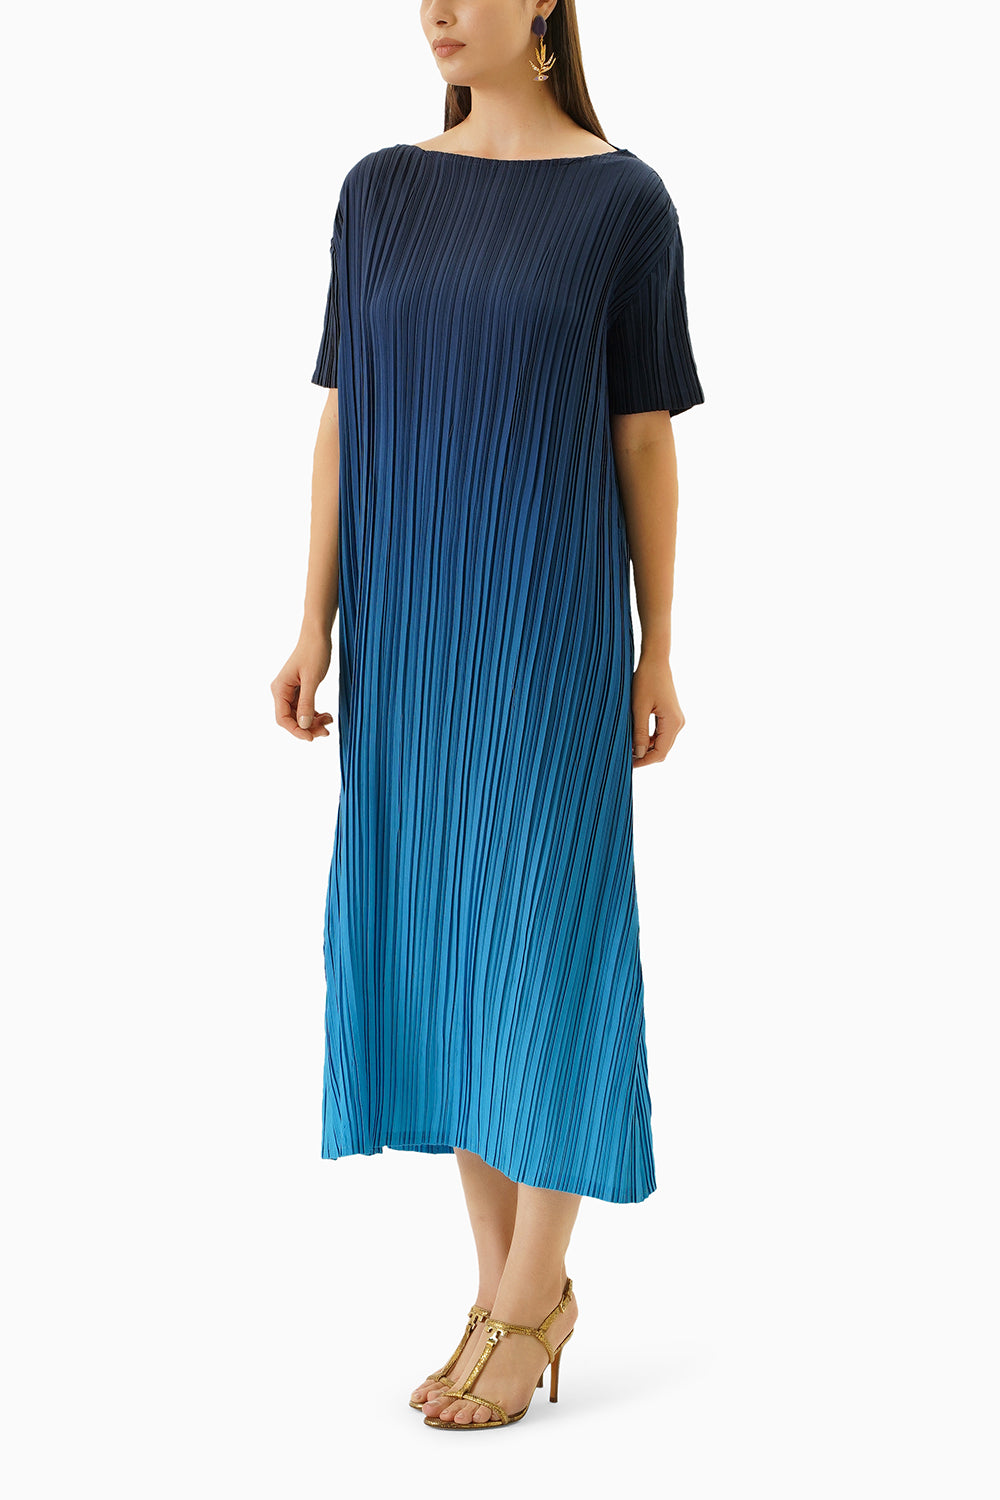 Ombre Blue Pleated Midi Dress